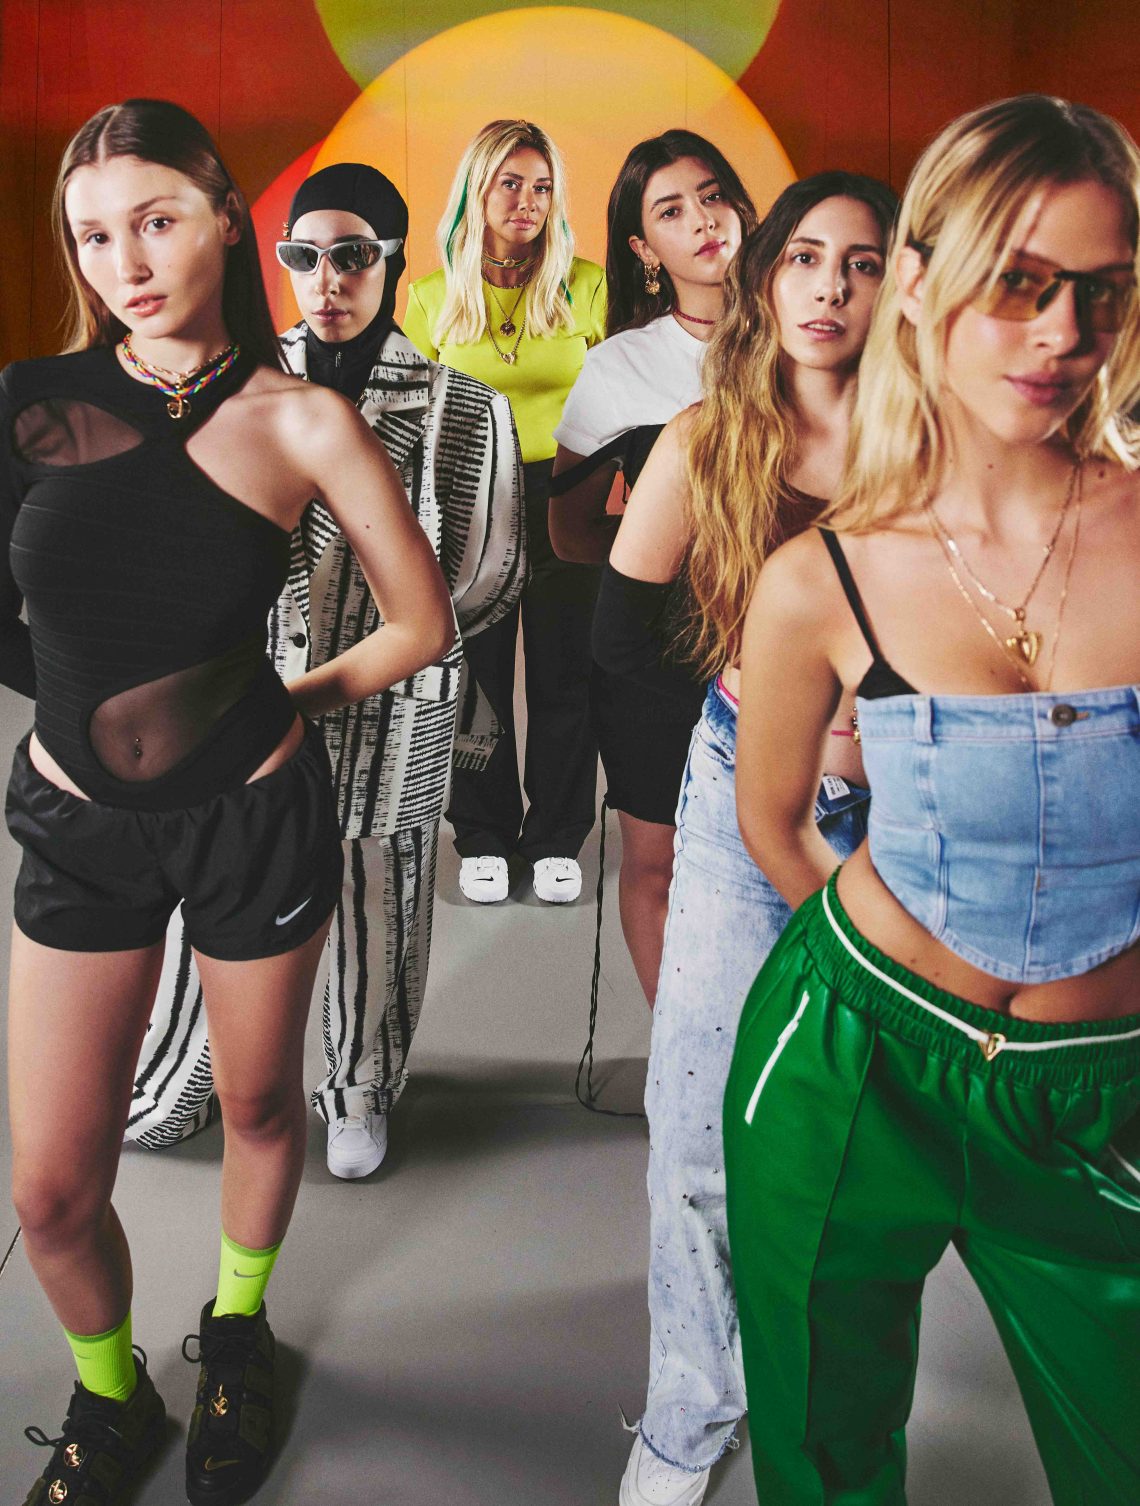 Pin by Zeynep on Poster tasarımları  Fitness wear outfits, Fitness  fashion, Outfits